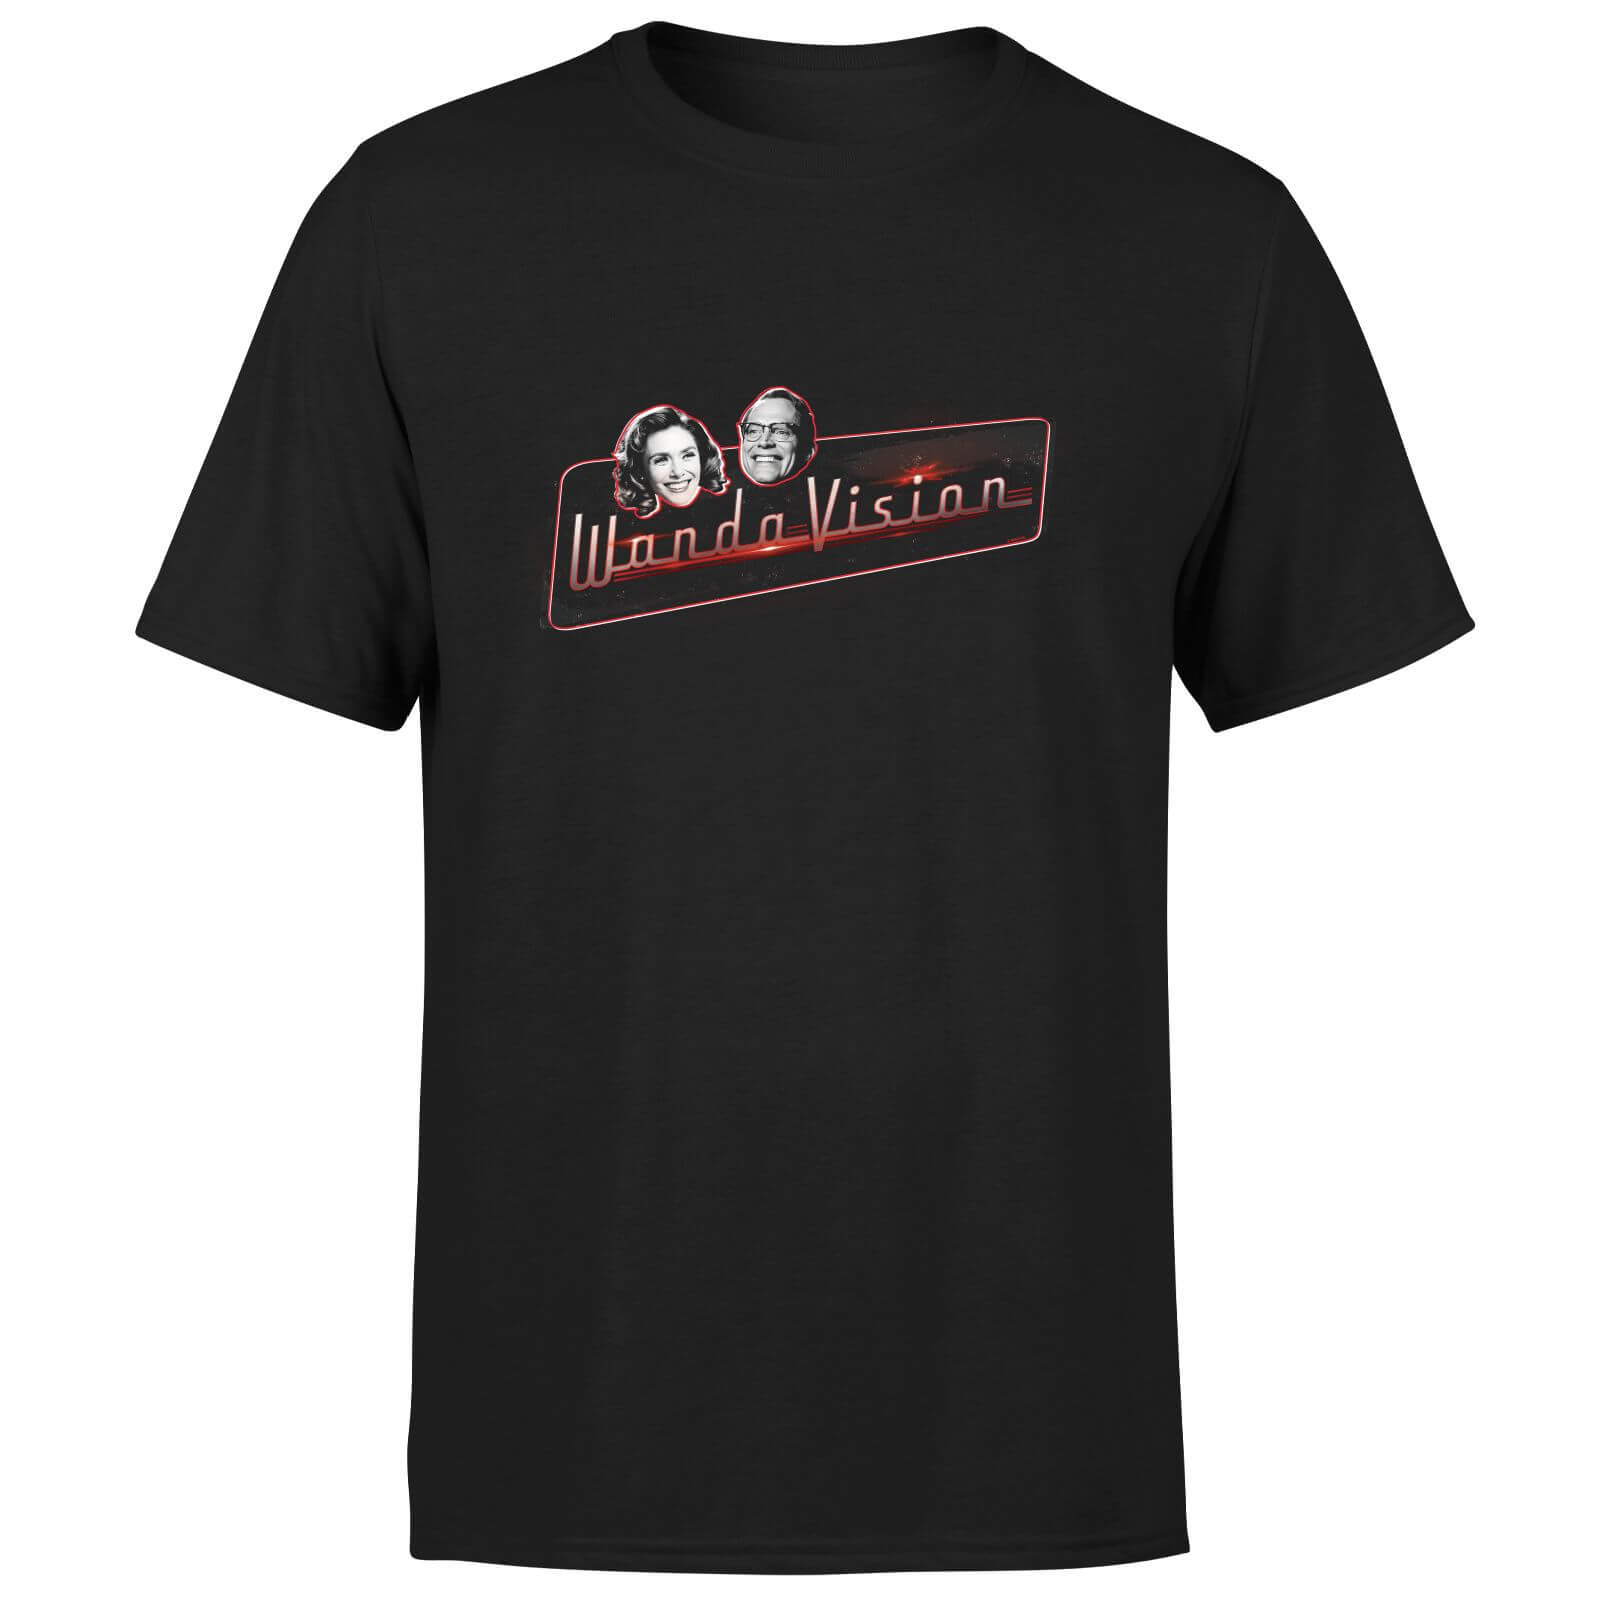 WandaVision Men's T-Shirt - Black - XS - Schwarz